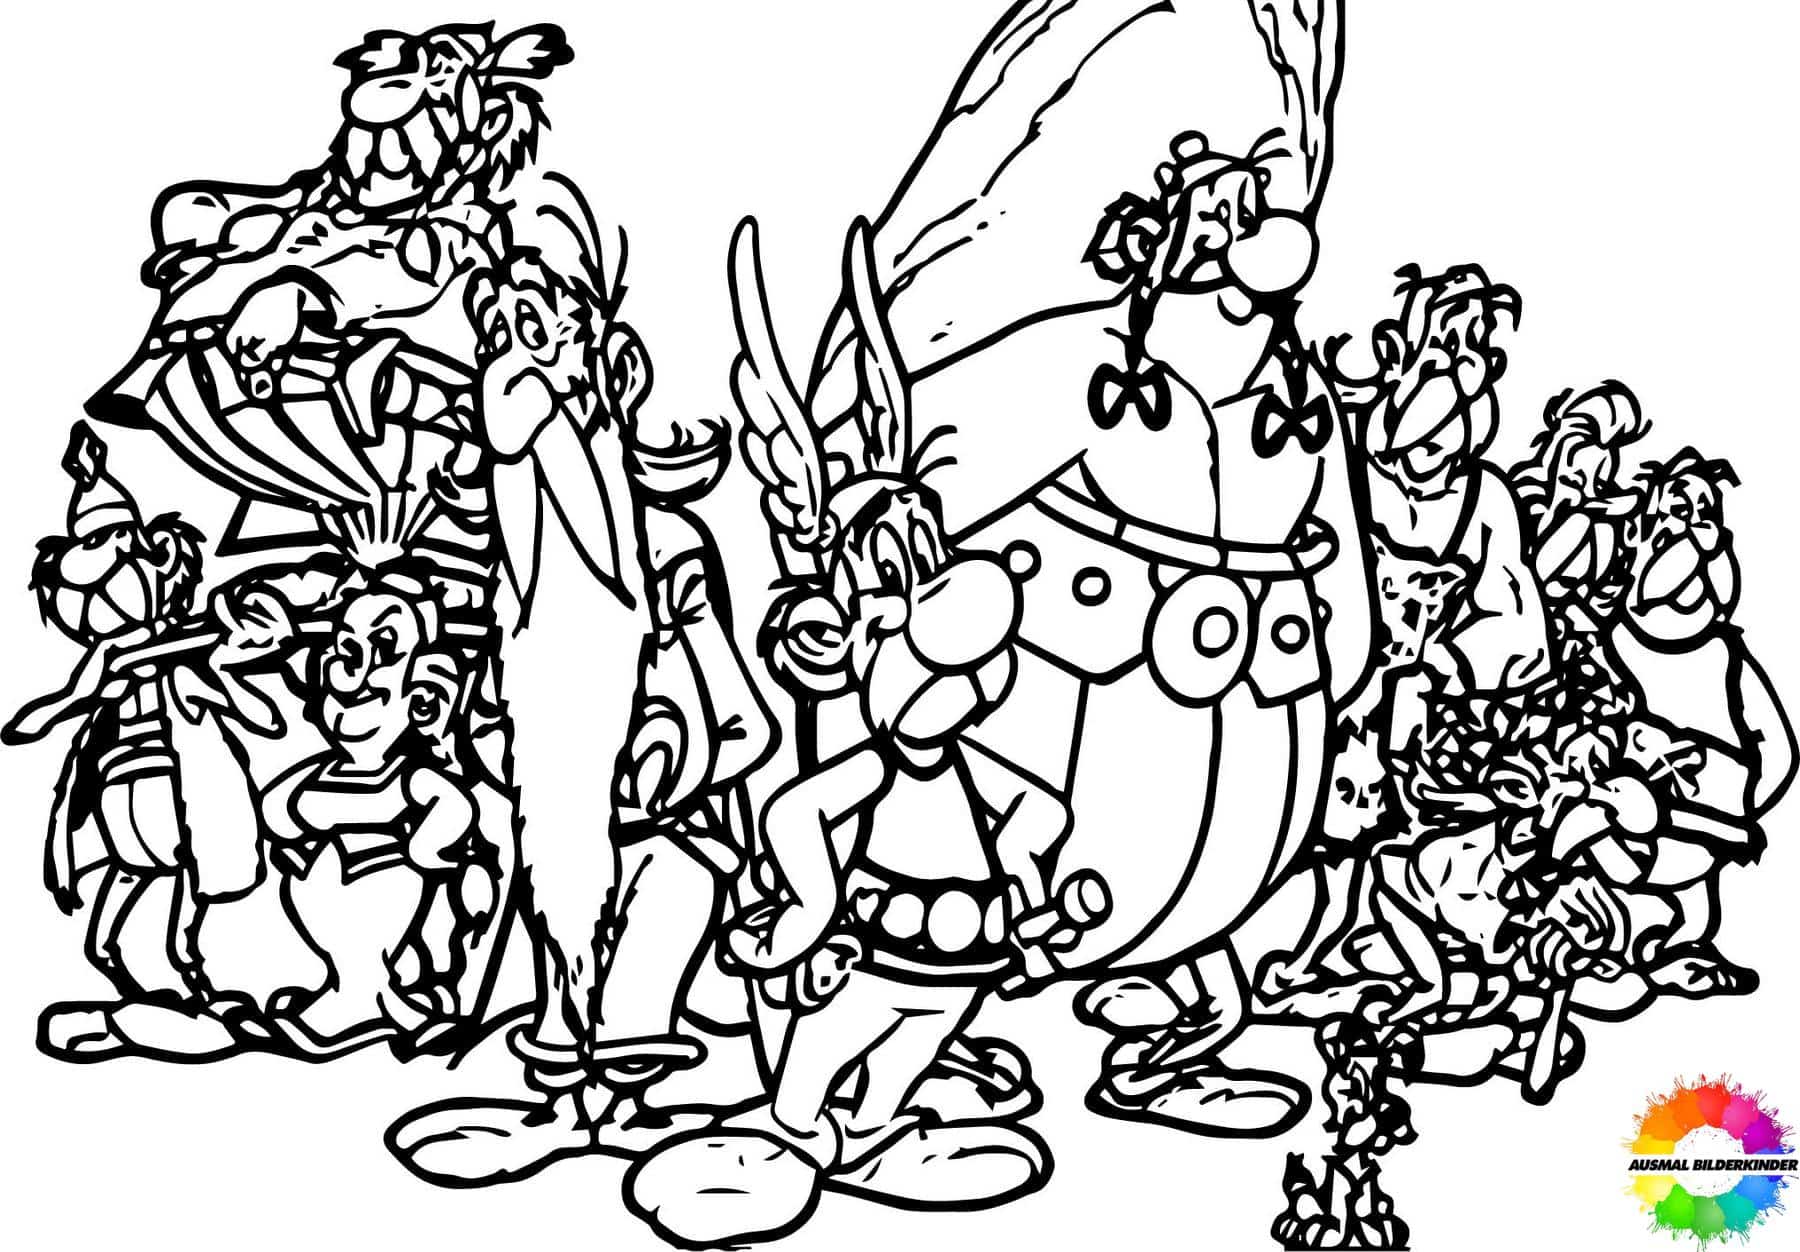 Asterix-and-Obelix-Ausmalbilder-ausmalbilderkinder-de-15